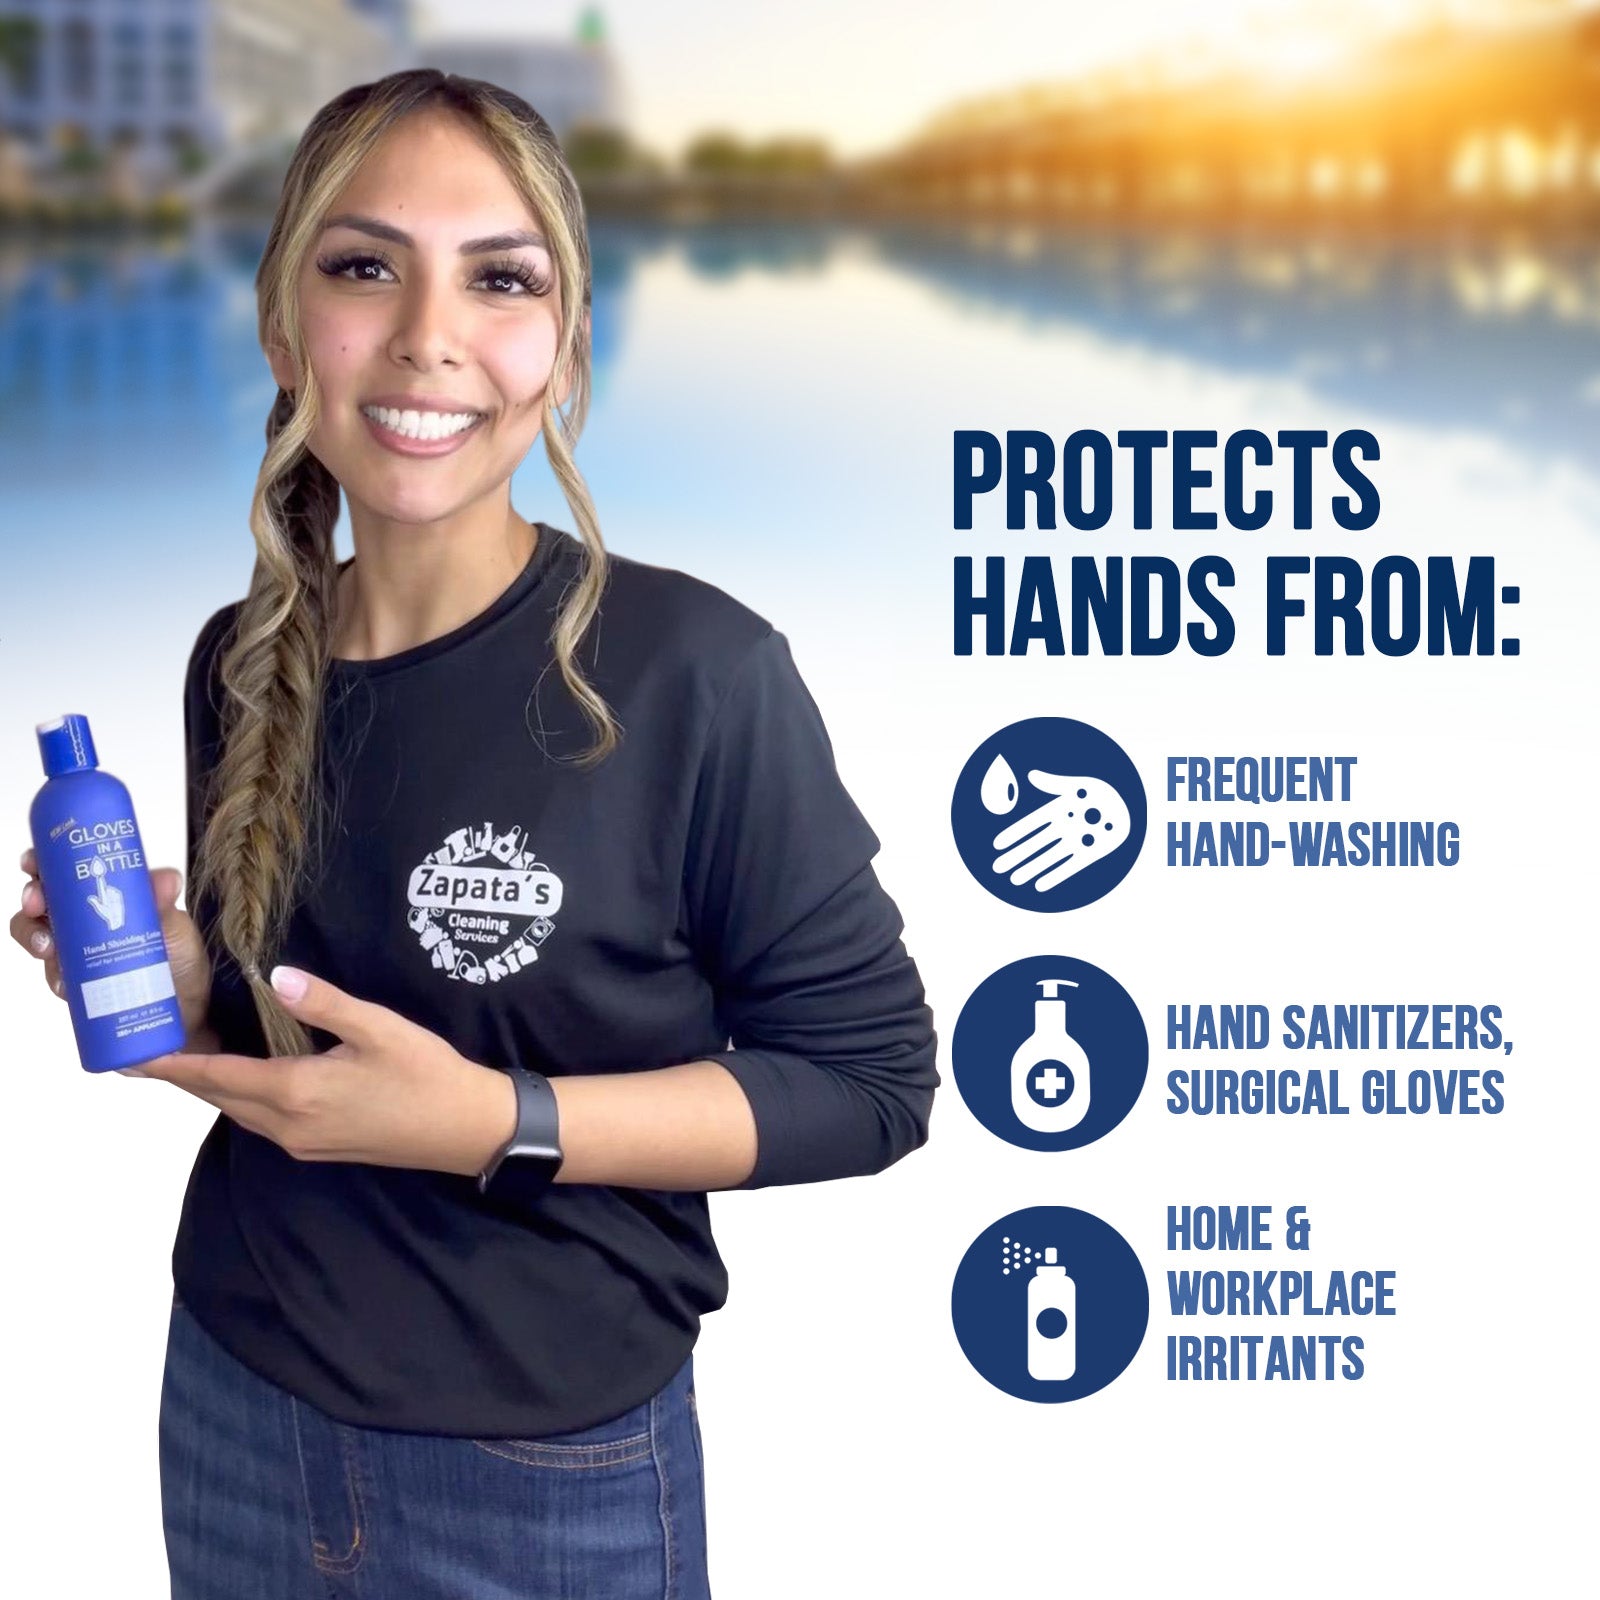 Gloves In A Bottle Shielding Lotion - Great for Dry Itchy Skin 8oz Bottle w/ pump + 2oz Bottle